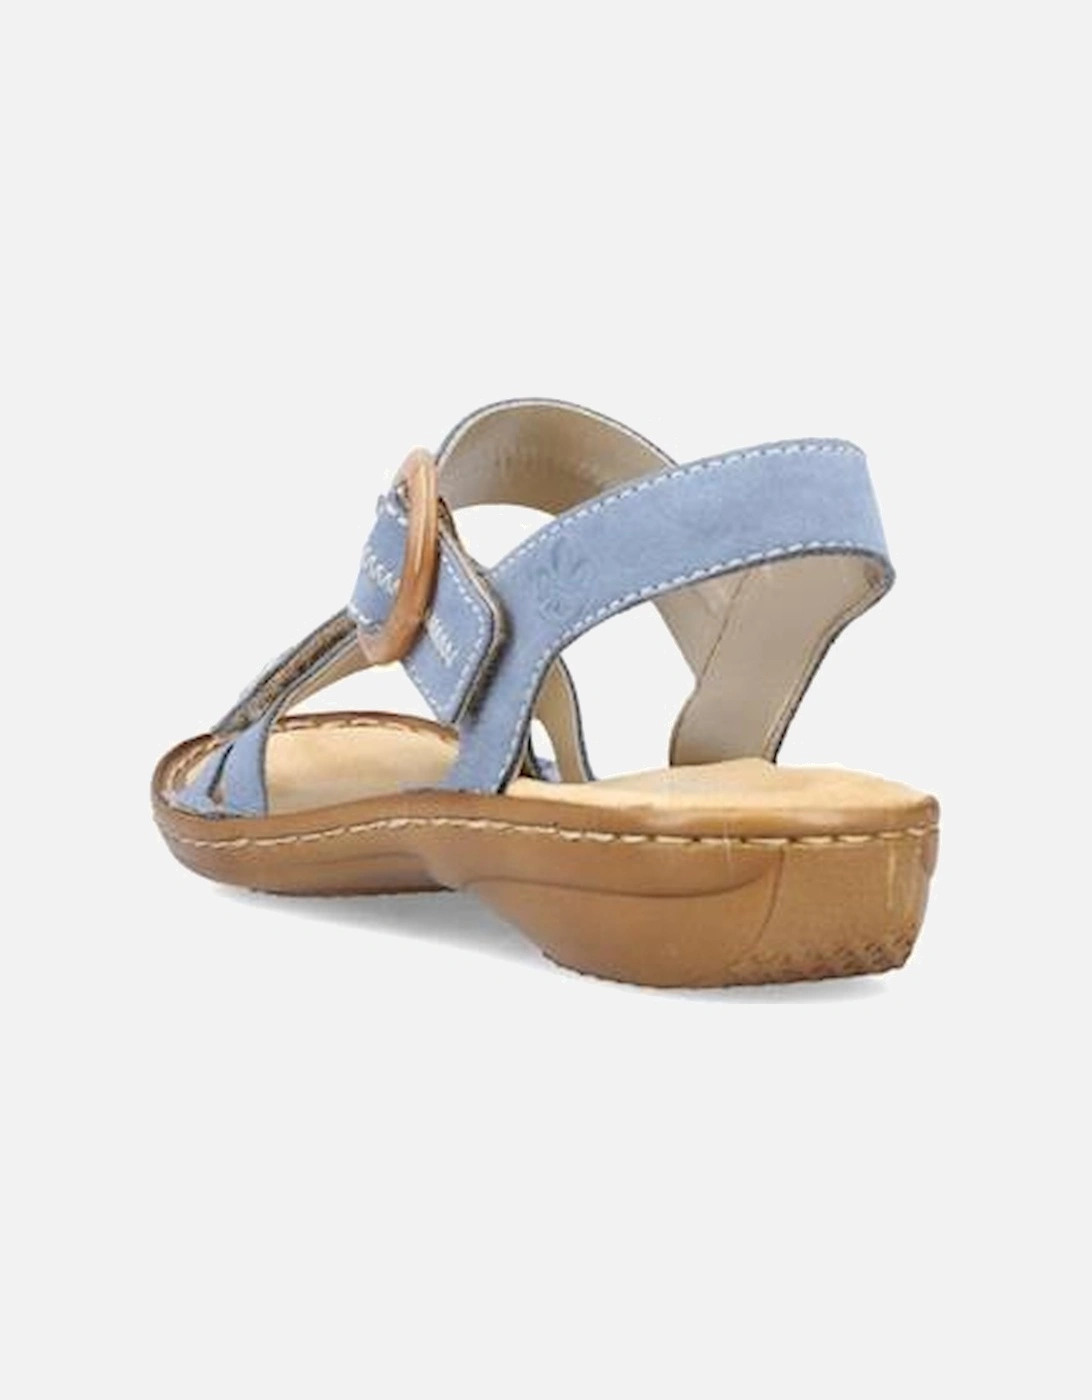 Sandals 608z3-14 in Blue